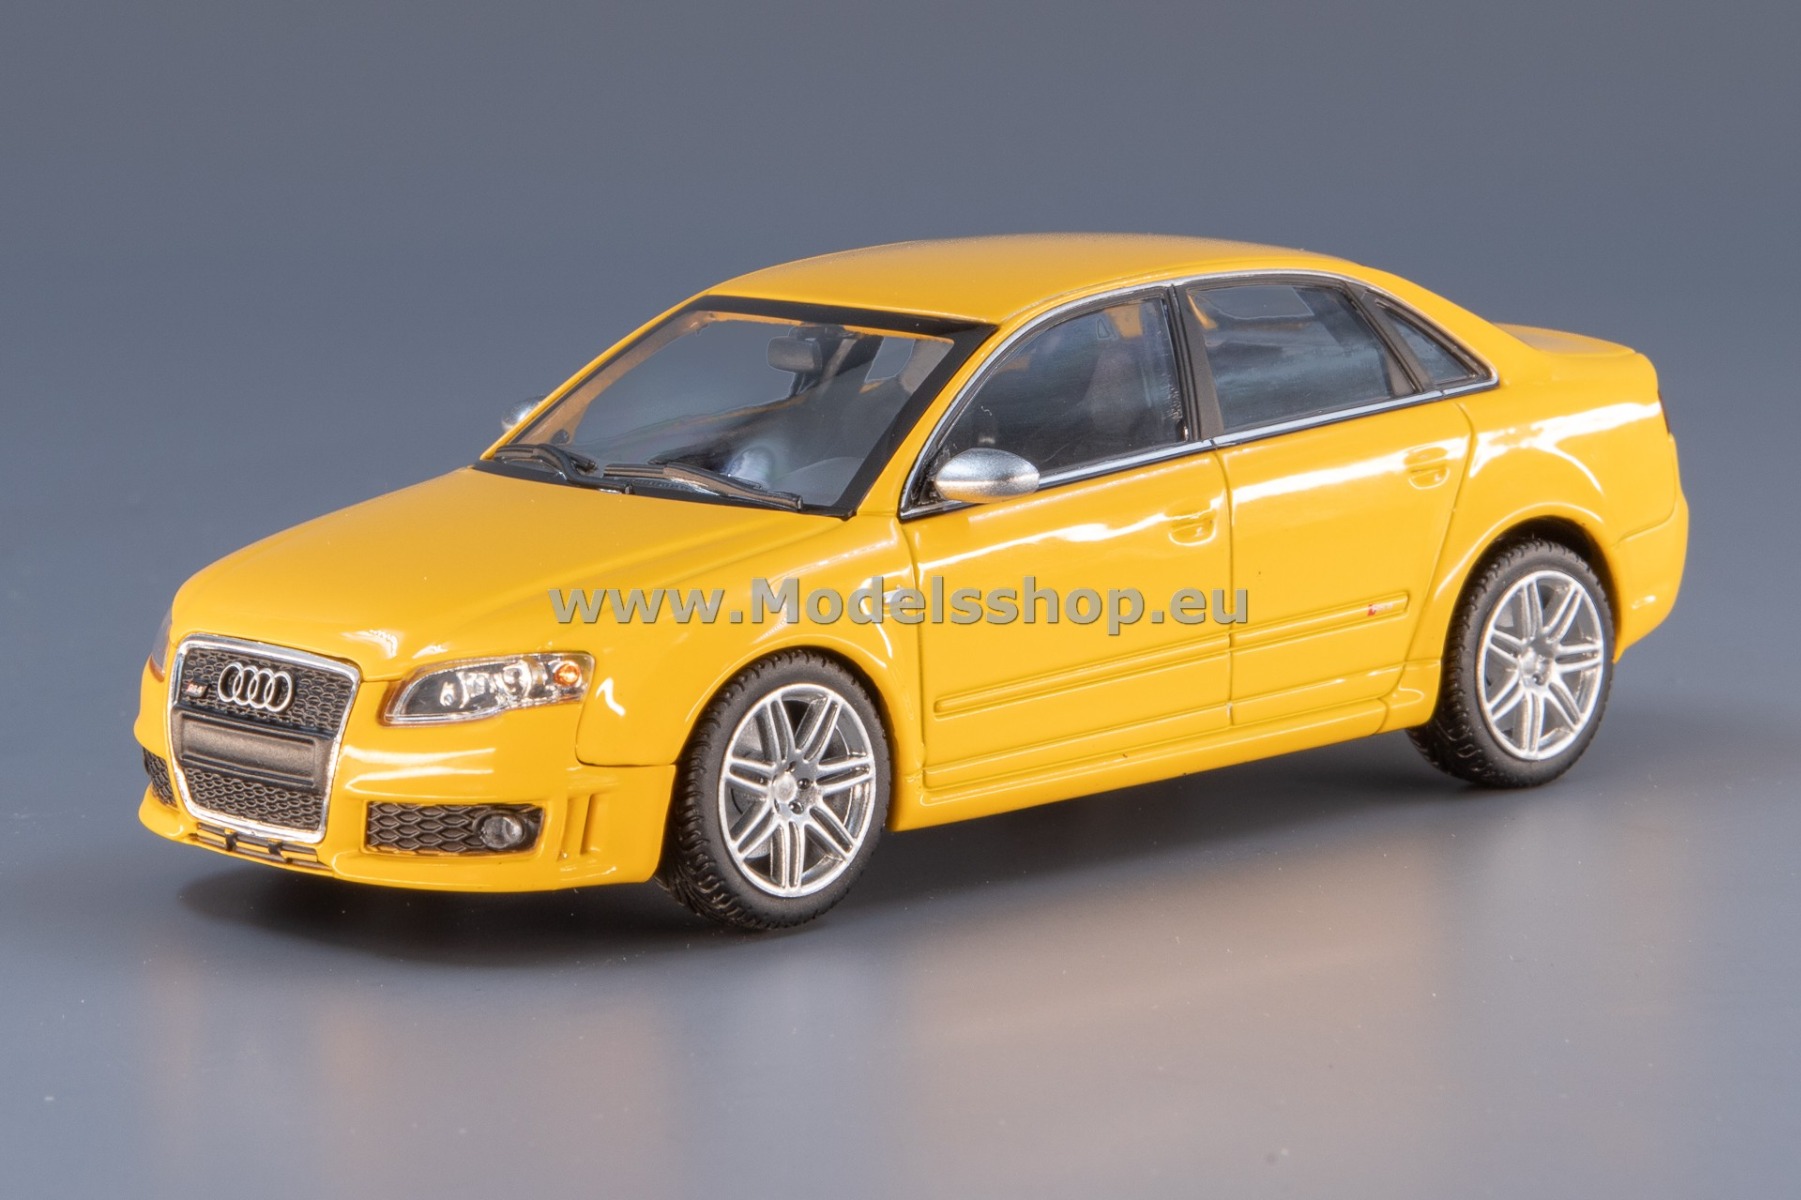 Maxichamps 940014600 Audi RS4, 2004 /yellow/